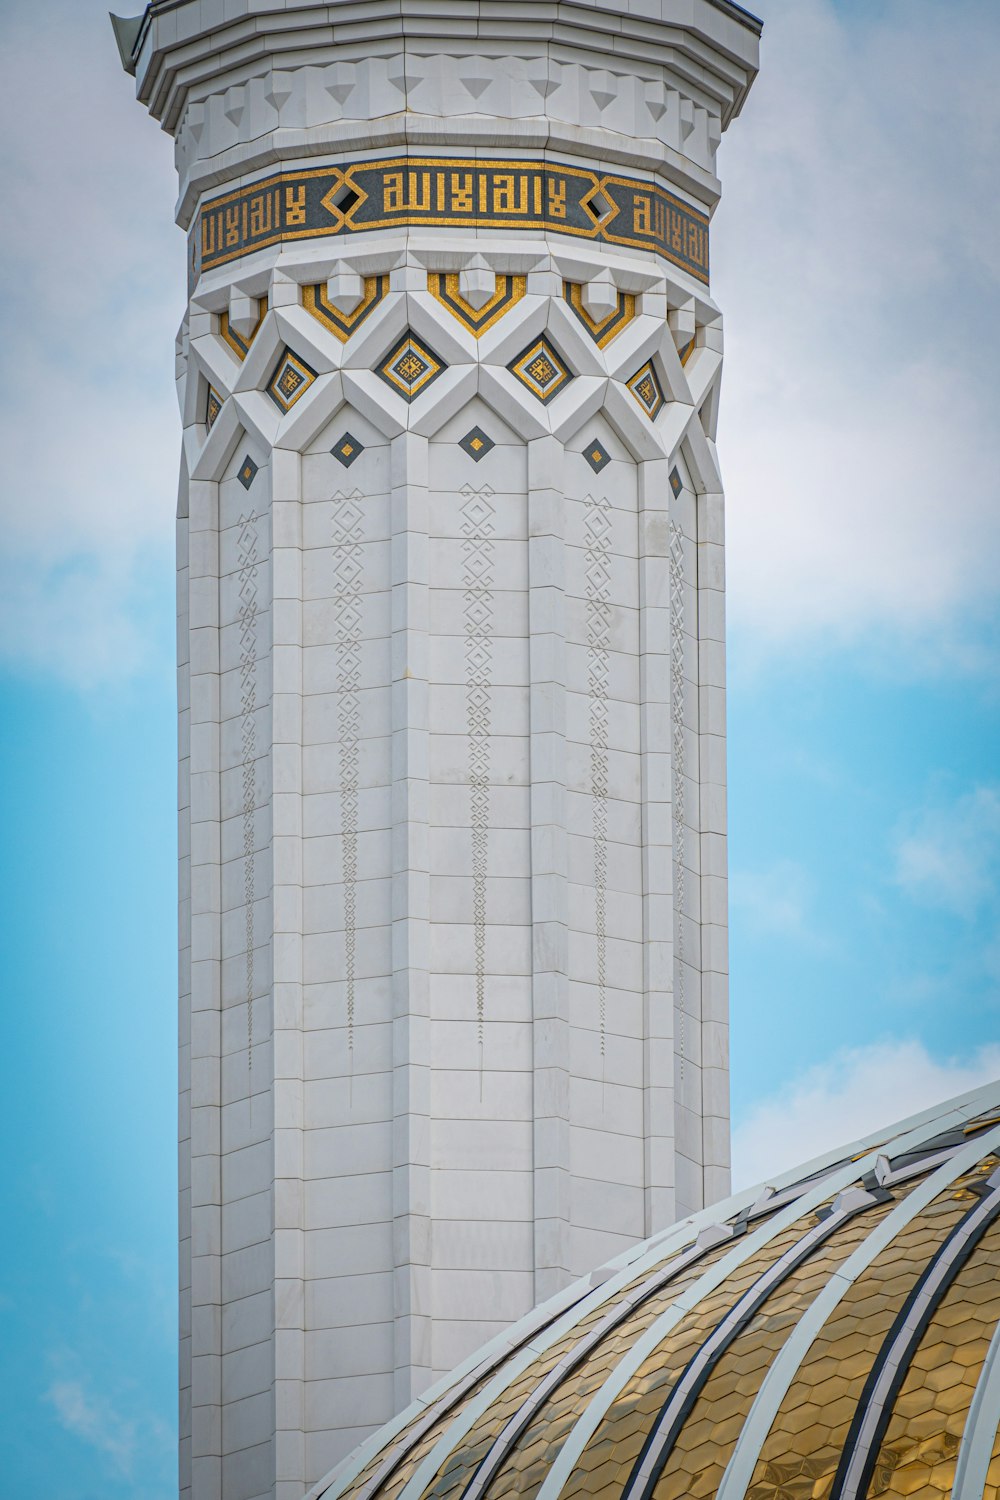 a tall white tower